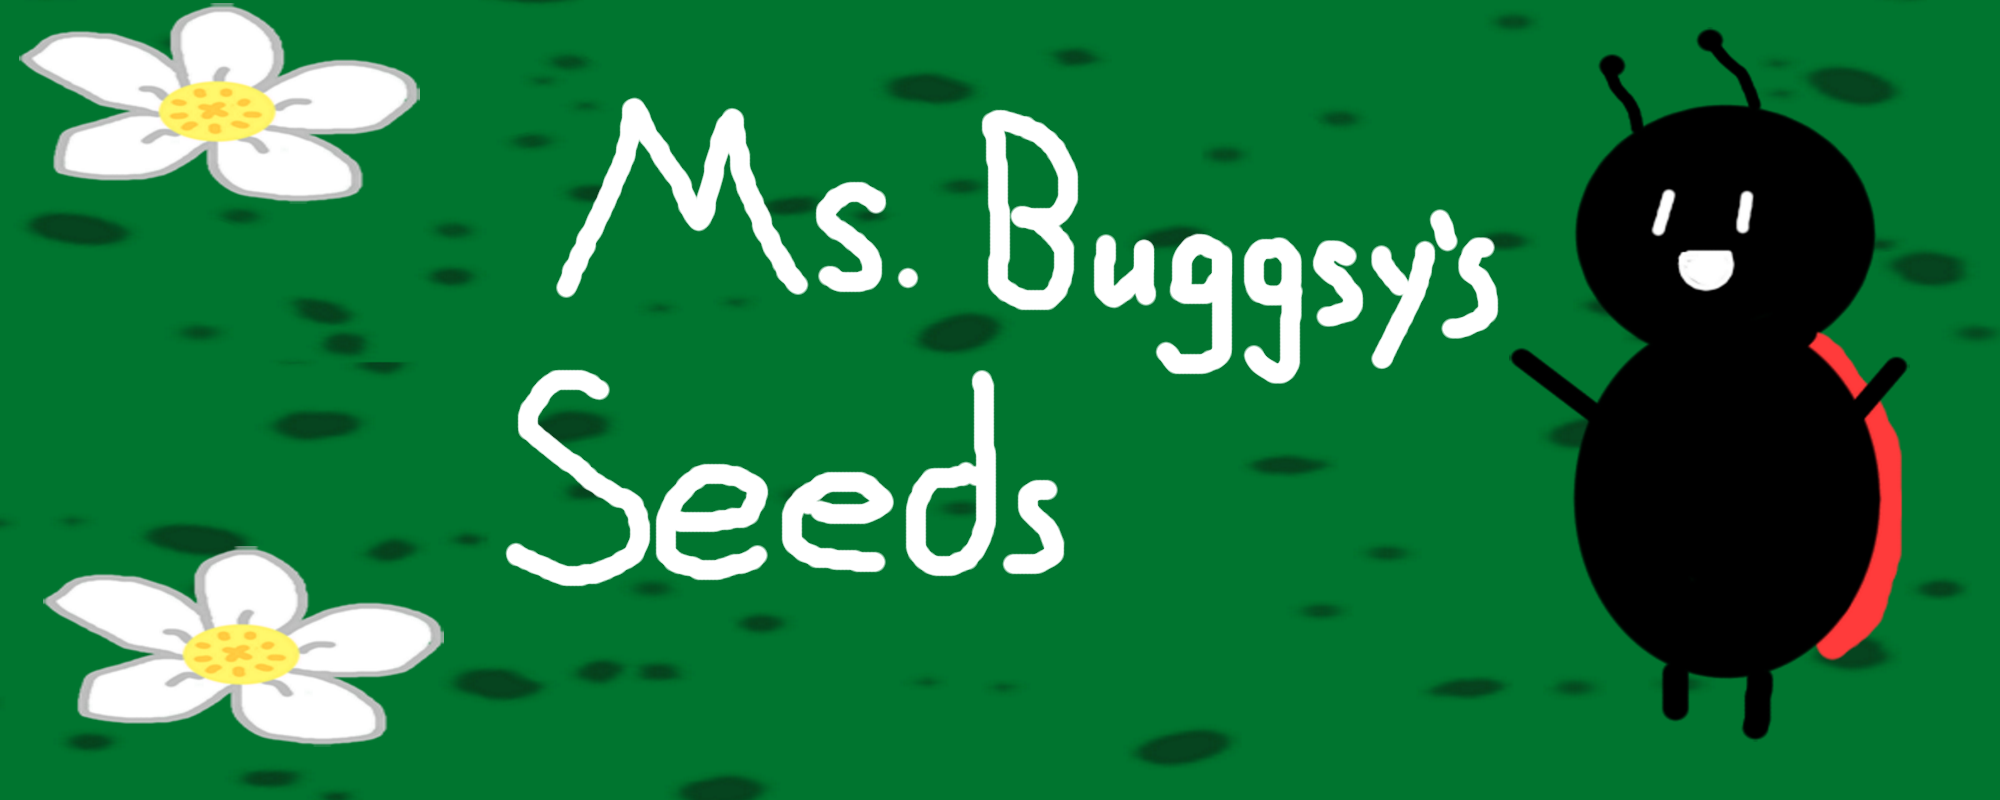 Ms Buggsys Seeds